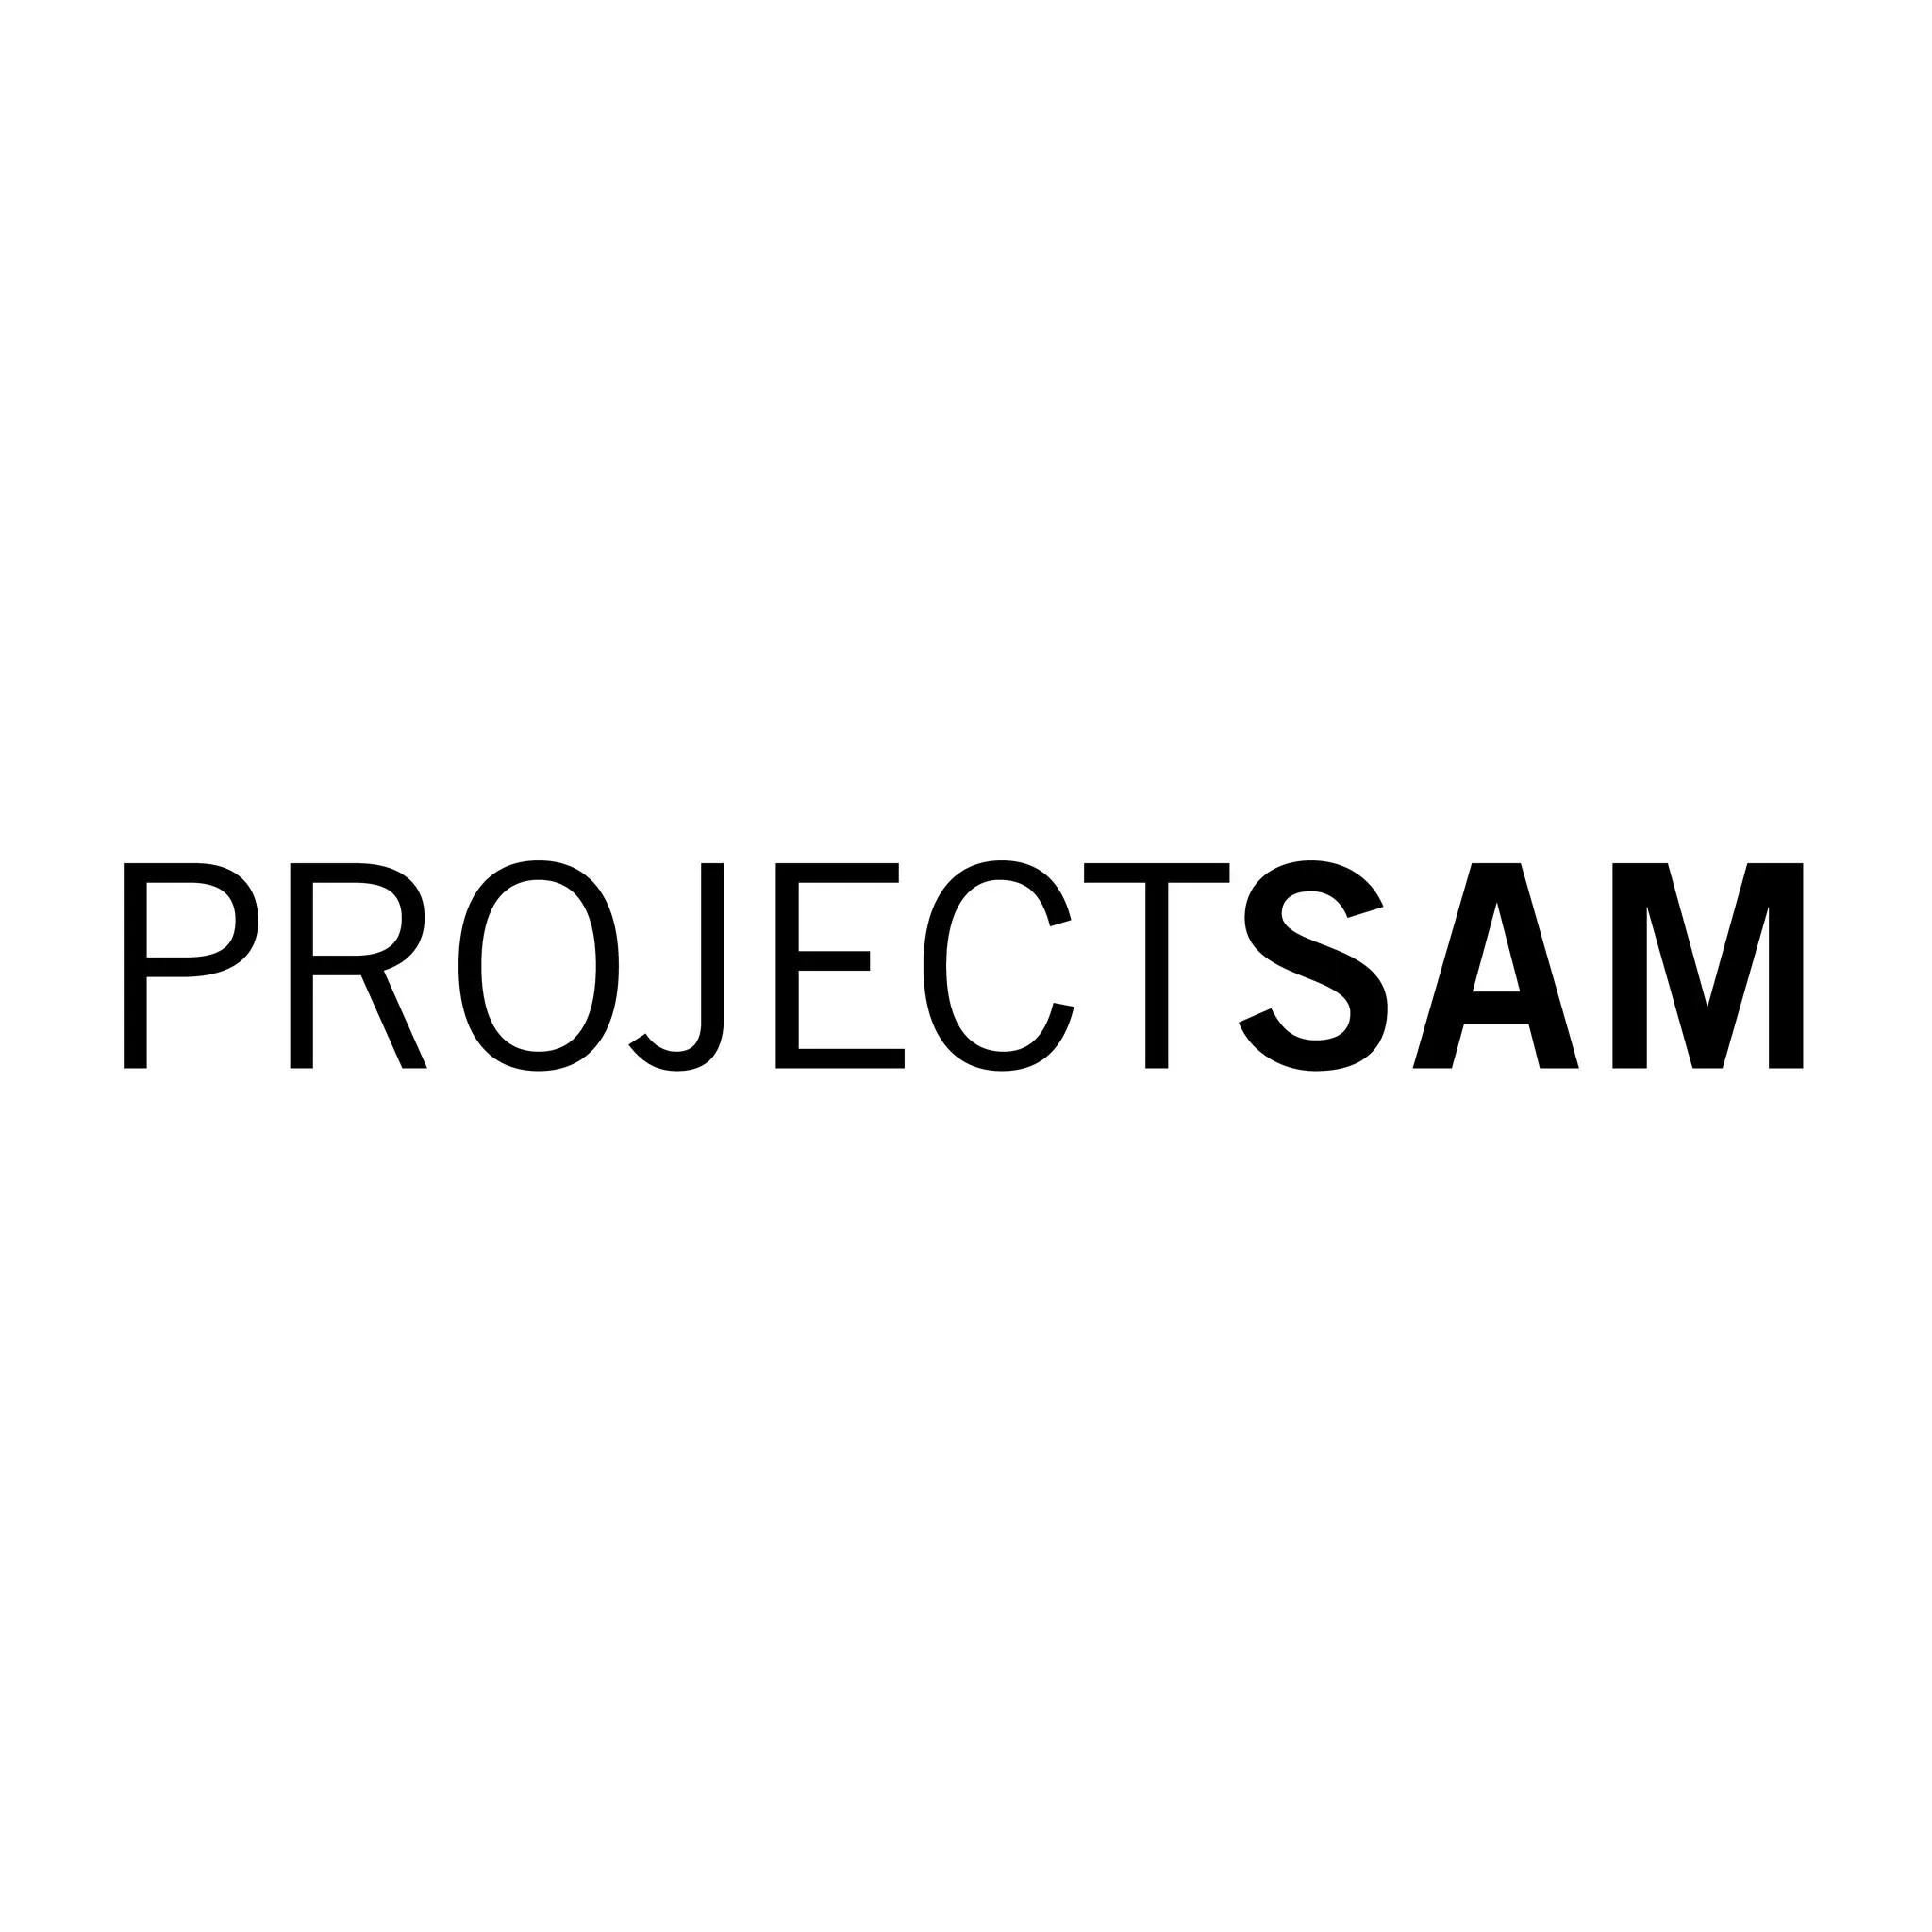 Projectsam